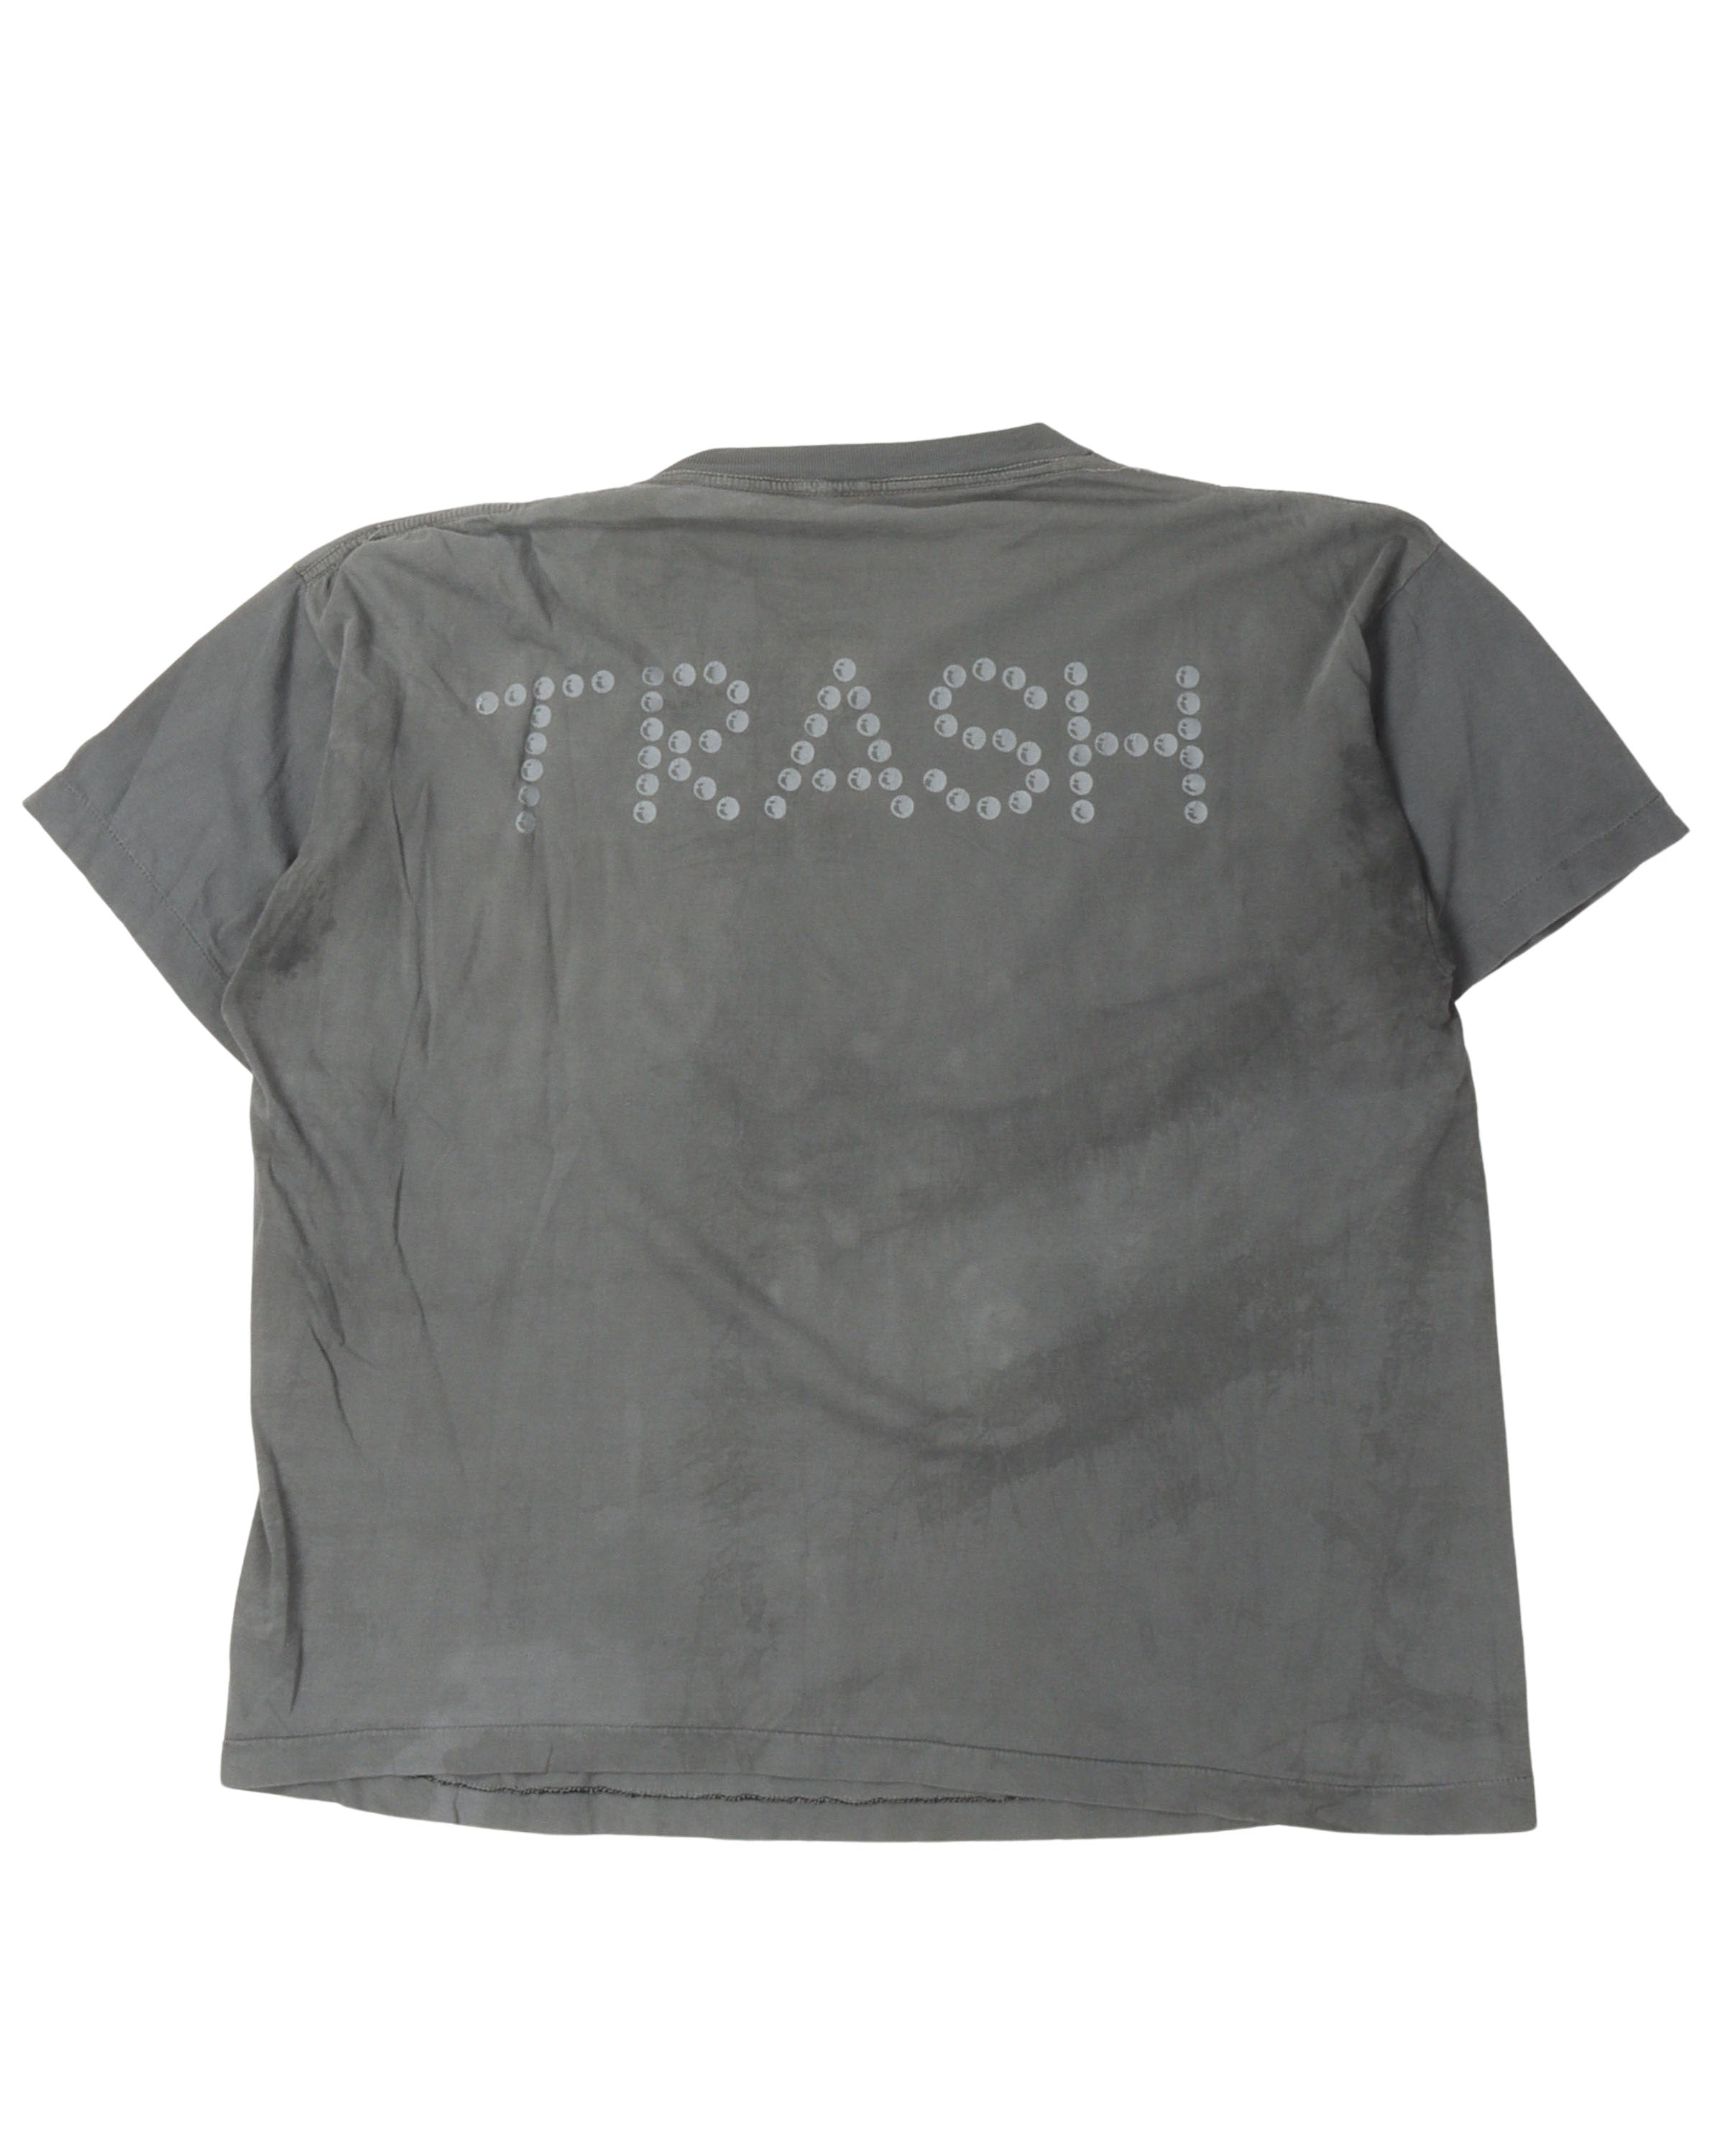 Alice Cooper Trash T-Shirt